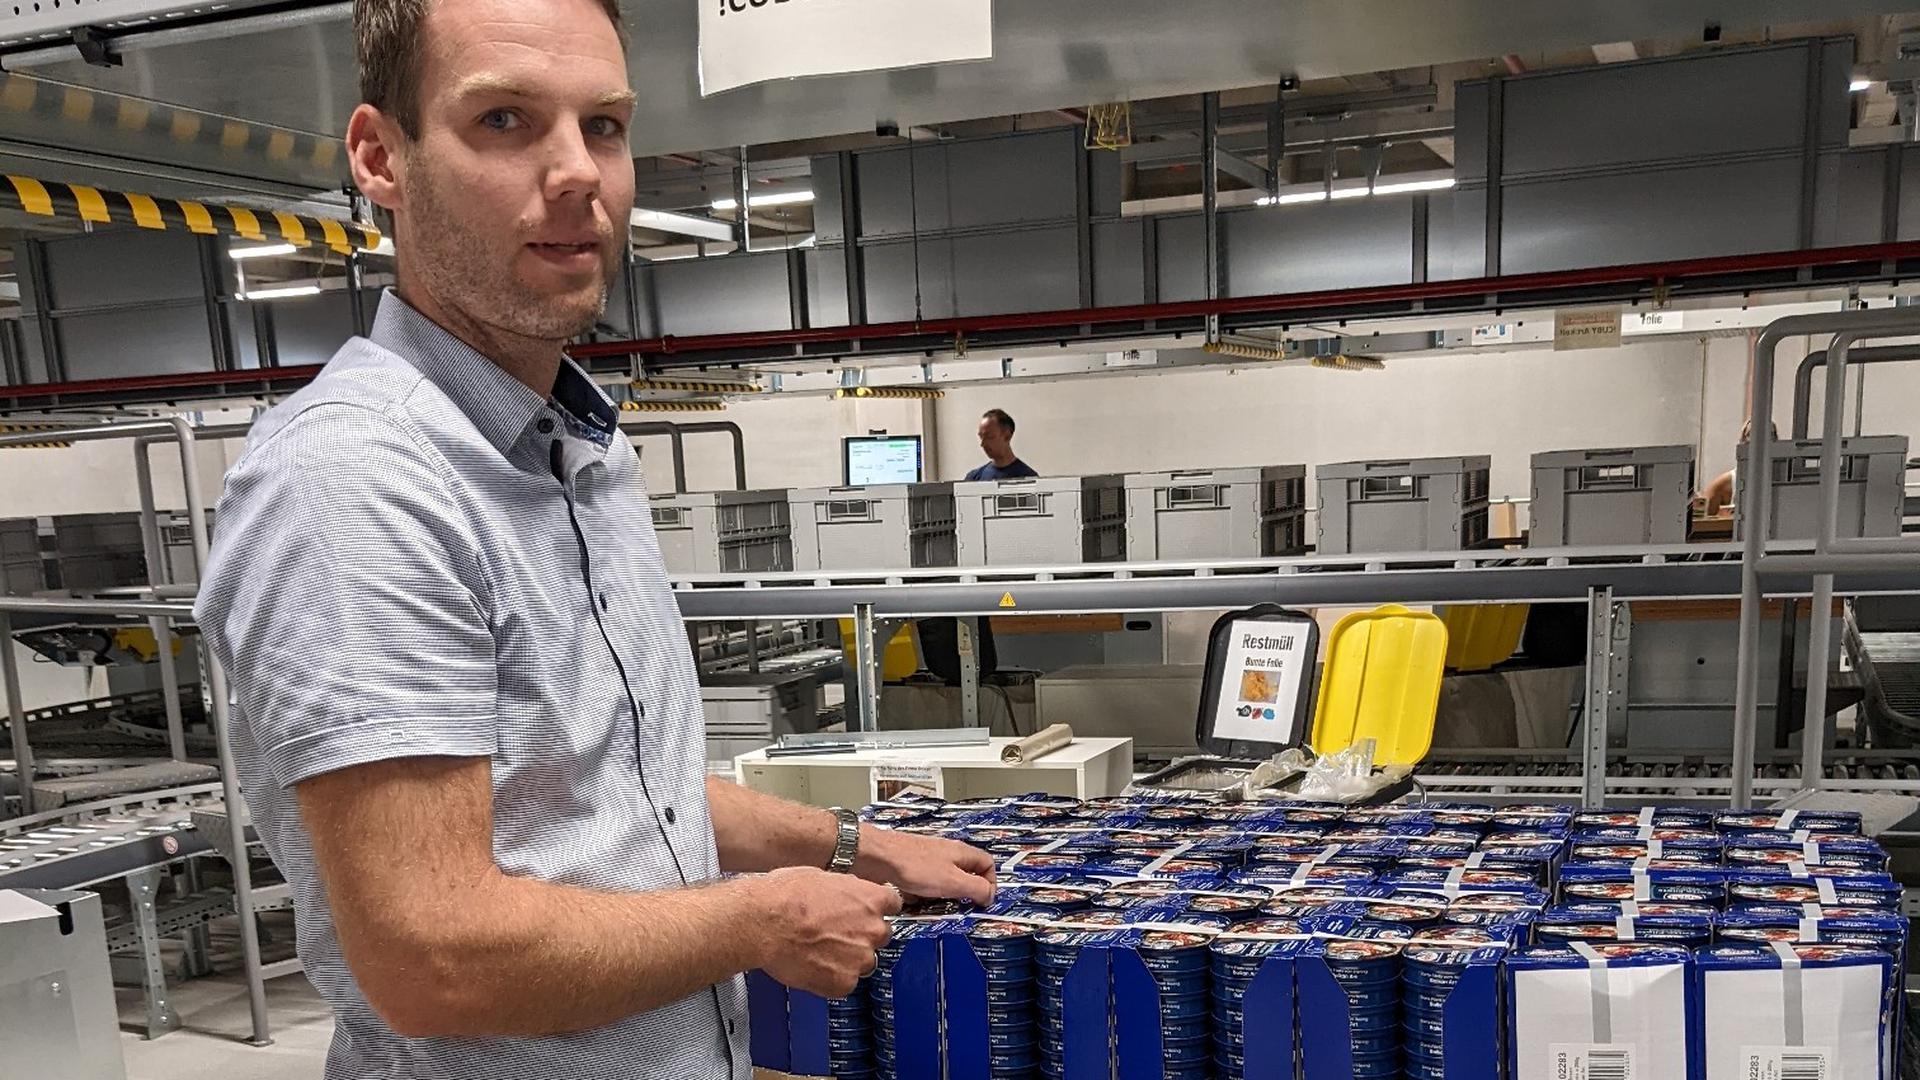 Betriebsleiter Björn Vahlenkamp erläutert die Umverpackung hunderter von Heringsfilet-Konserven.
 